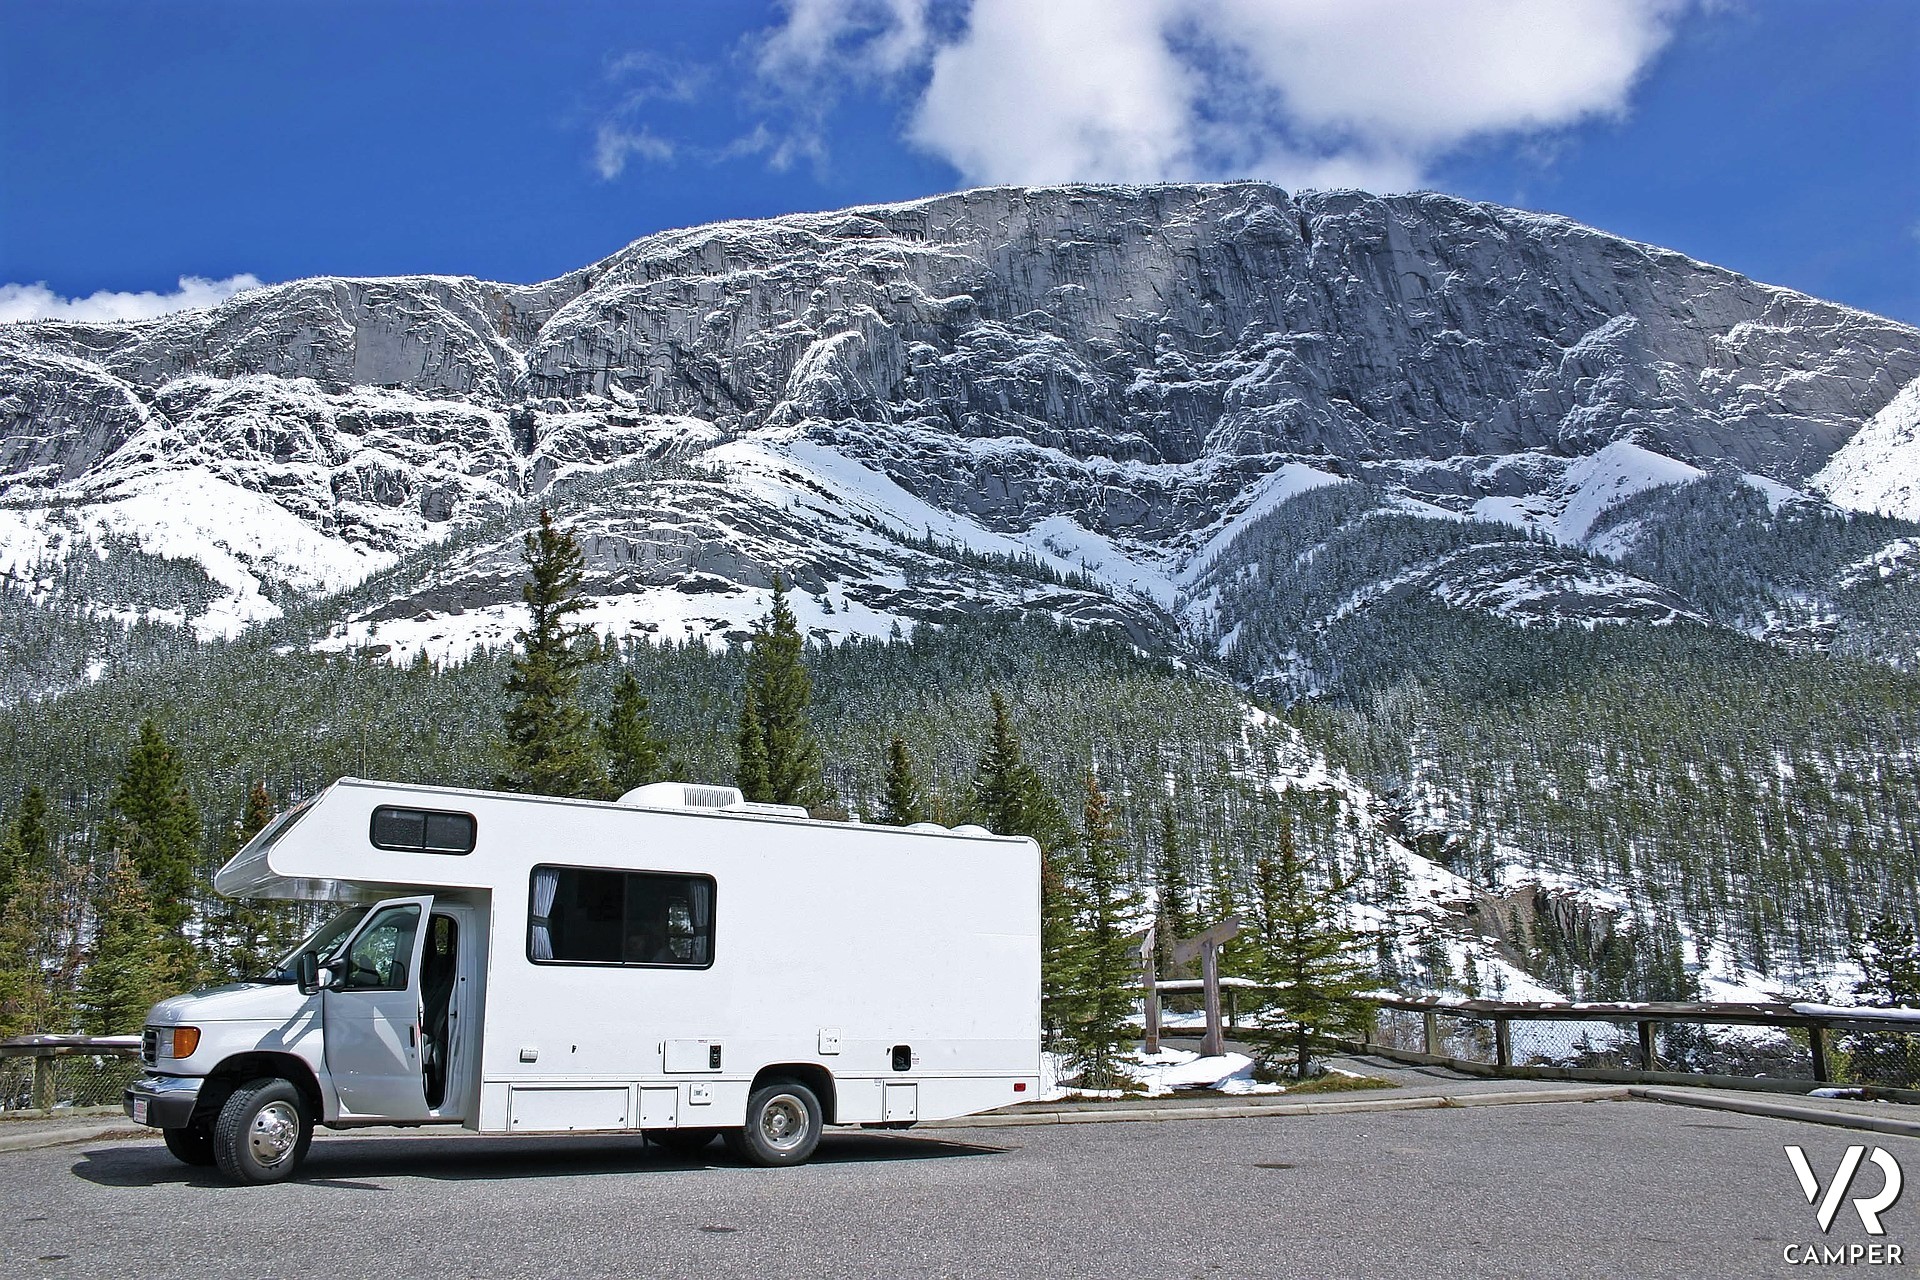 Camper in montagna in inverno - quanto costa assicurazione camper